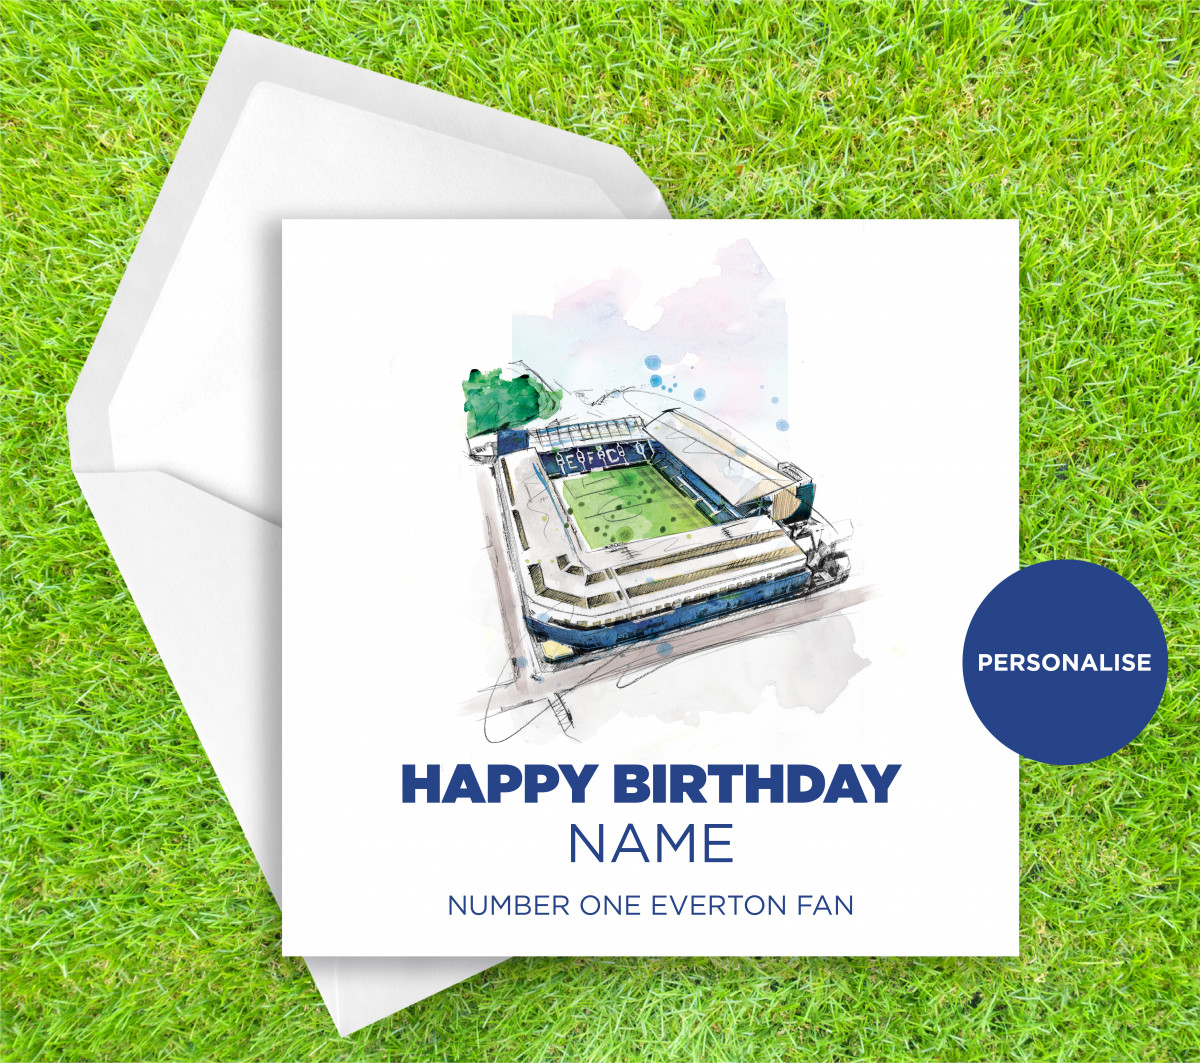 Everton, Goodison Park, personalised birthday card